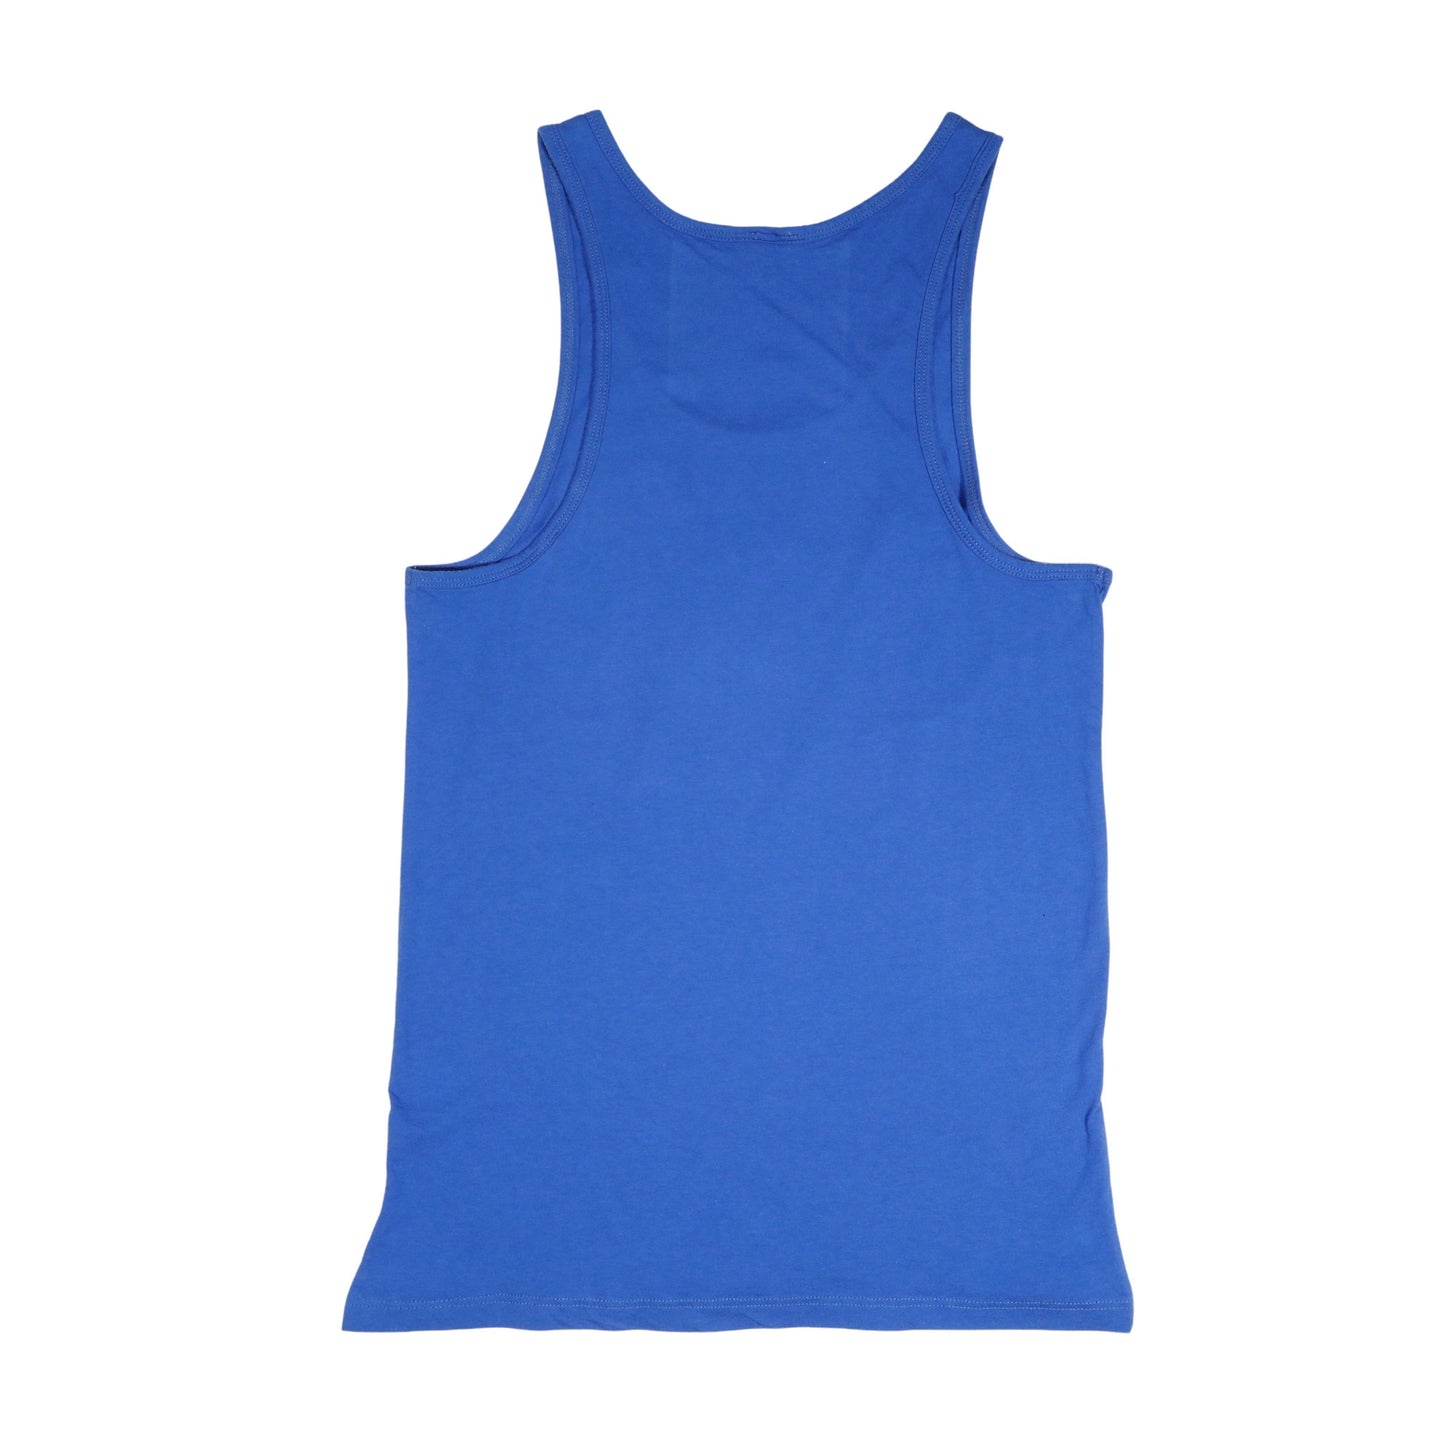 Men's - ITA Tank Royal Blue Tank Top A-Shirt-Vaughn de Heart